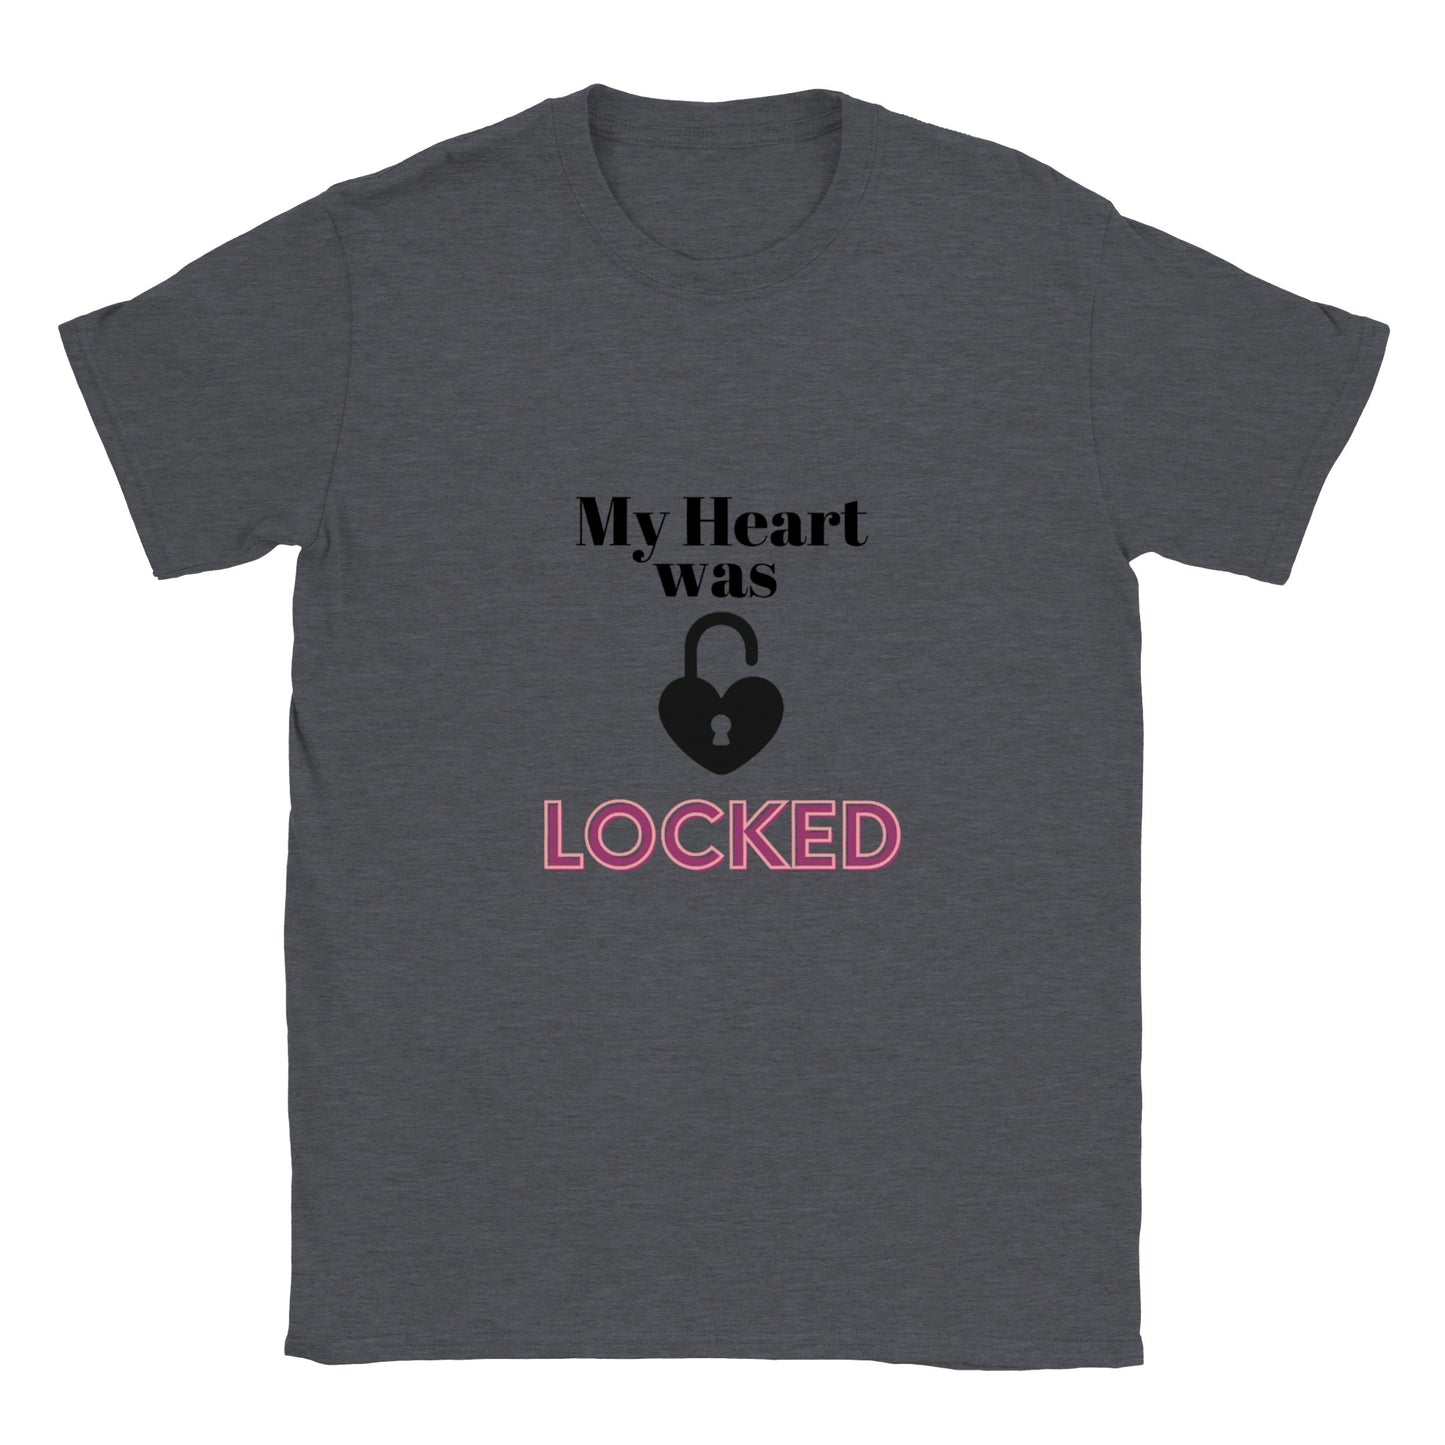 My Heart Was Locked T-shirt